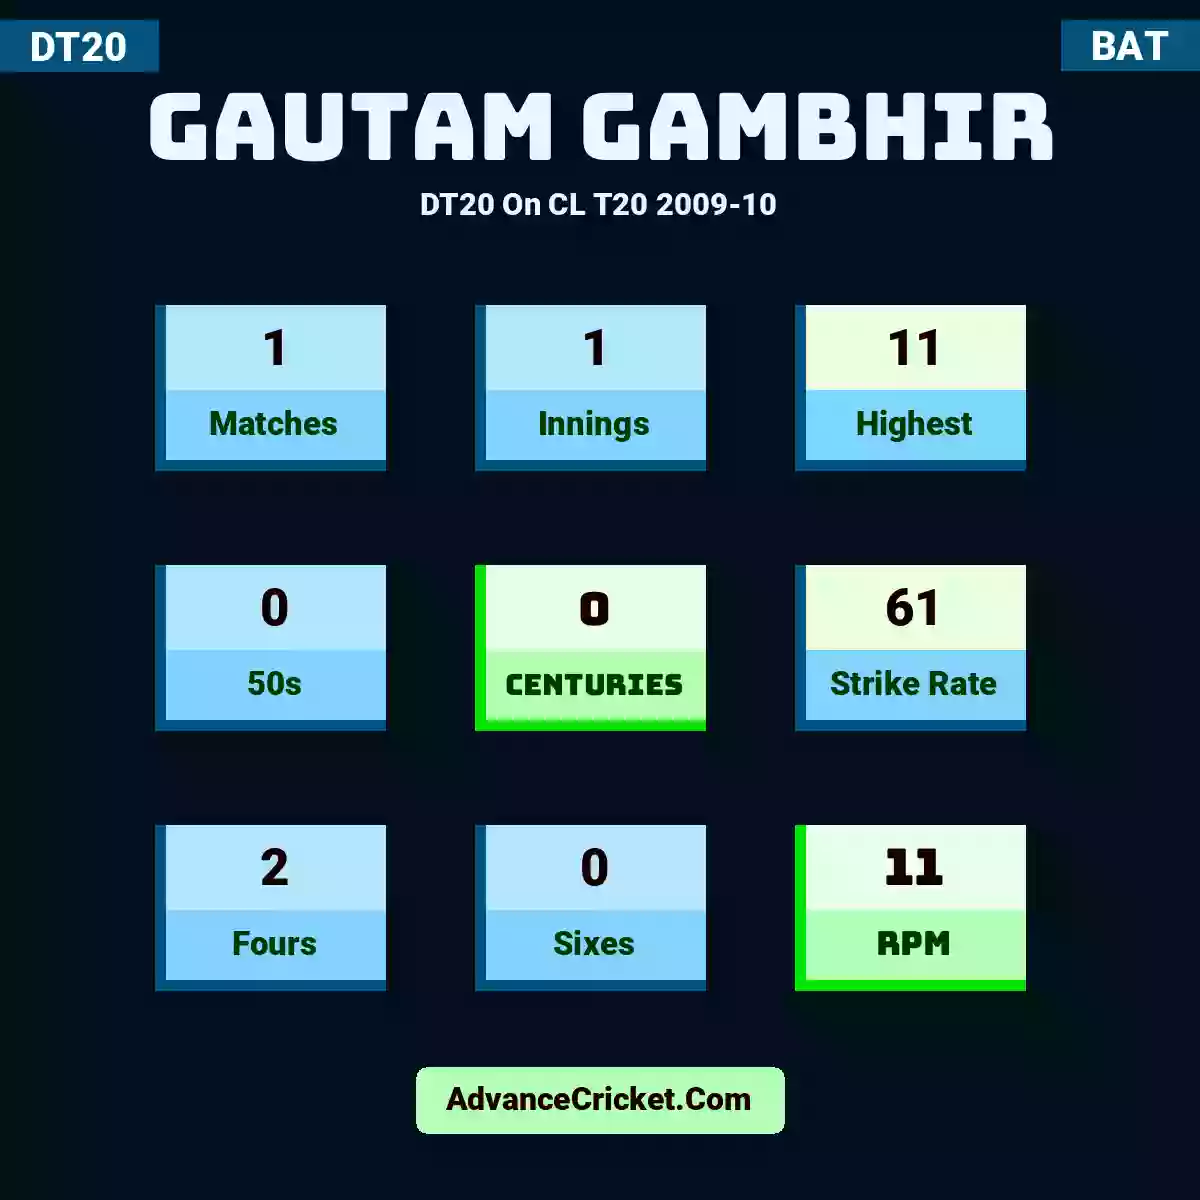 Gautam Gambhir DT20  On CL T20 2009-10, Gautam Gambhir played 1 matches, scored 11 runs as highest, 0 half-centuries, and 0 centuries, with a strike rate of 61. G.Gambhir hit 2 fours and 0 sixes, with an RPM of 11.